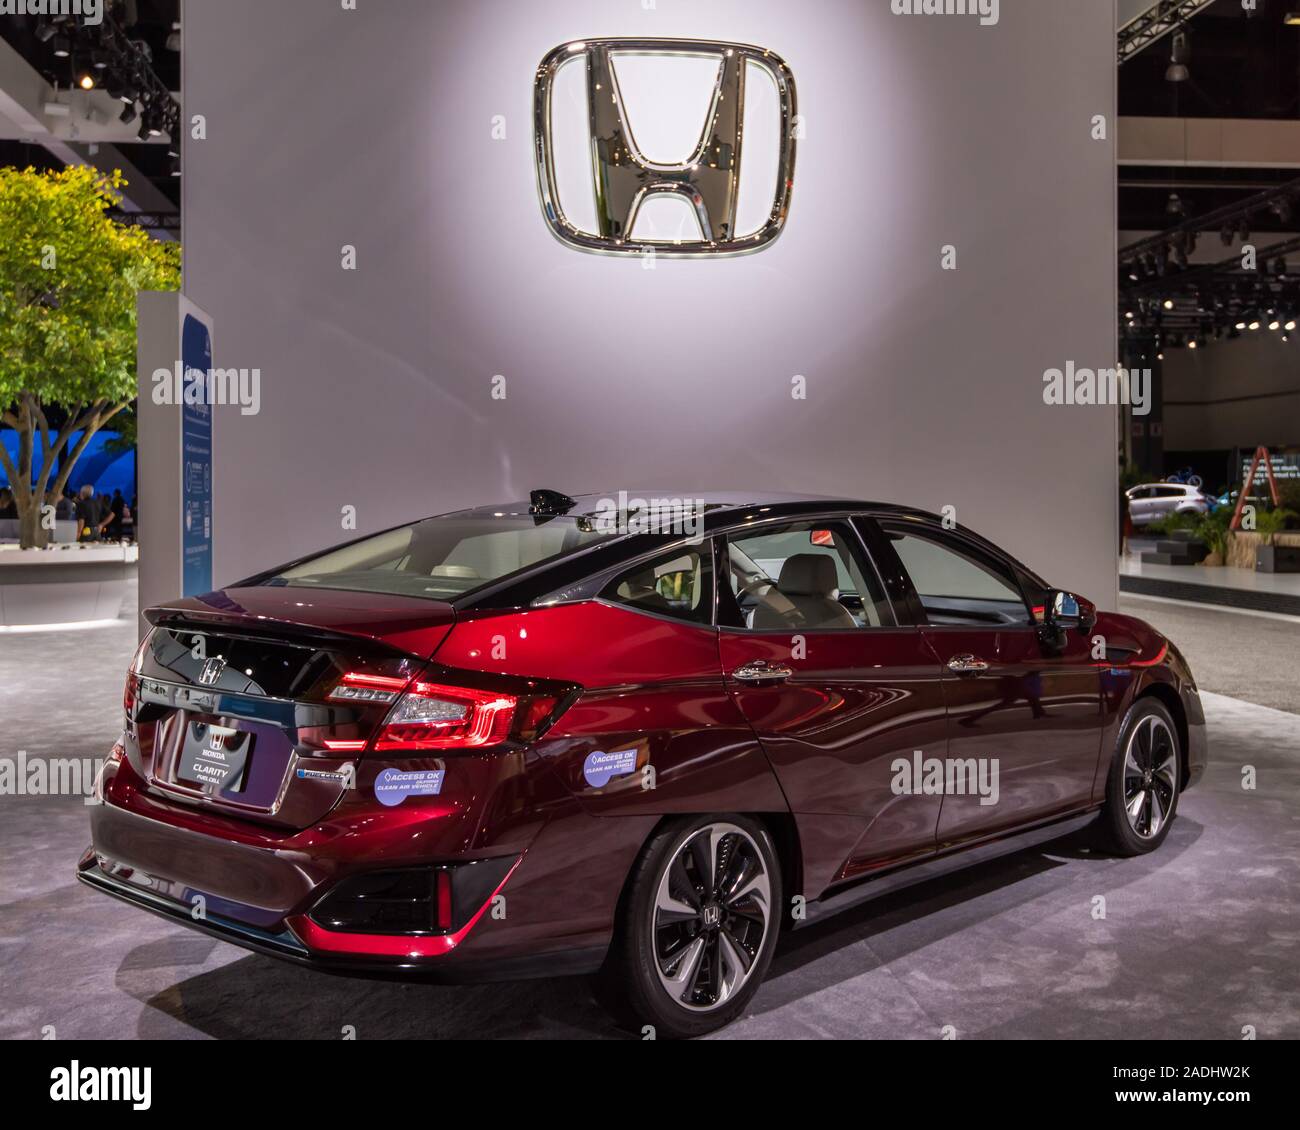 LOS ANGELES, CA/USA - NOVEMBER 20, 2019: A 2019 Honda Clarity electric hybrid car at the Los Angeles Auto Show. Stock Photo